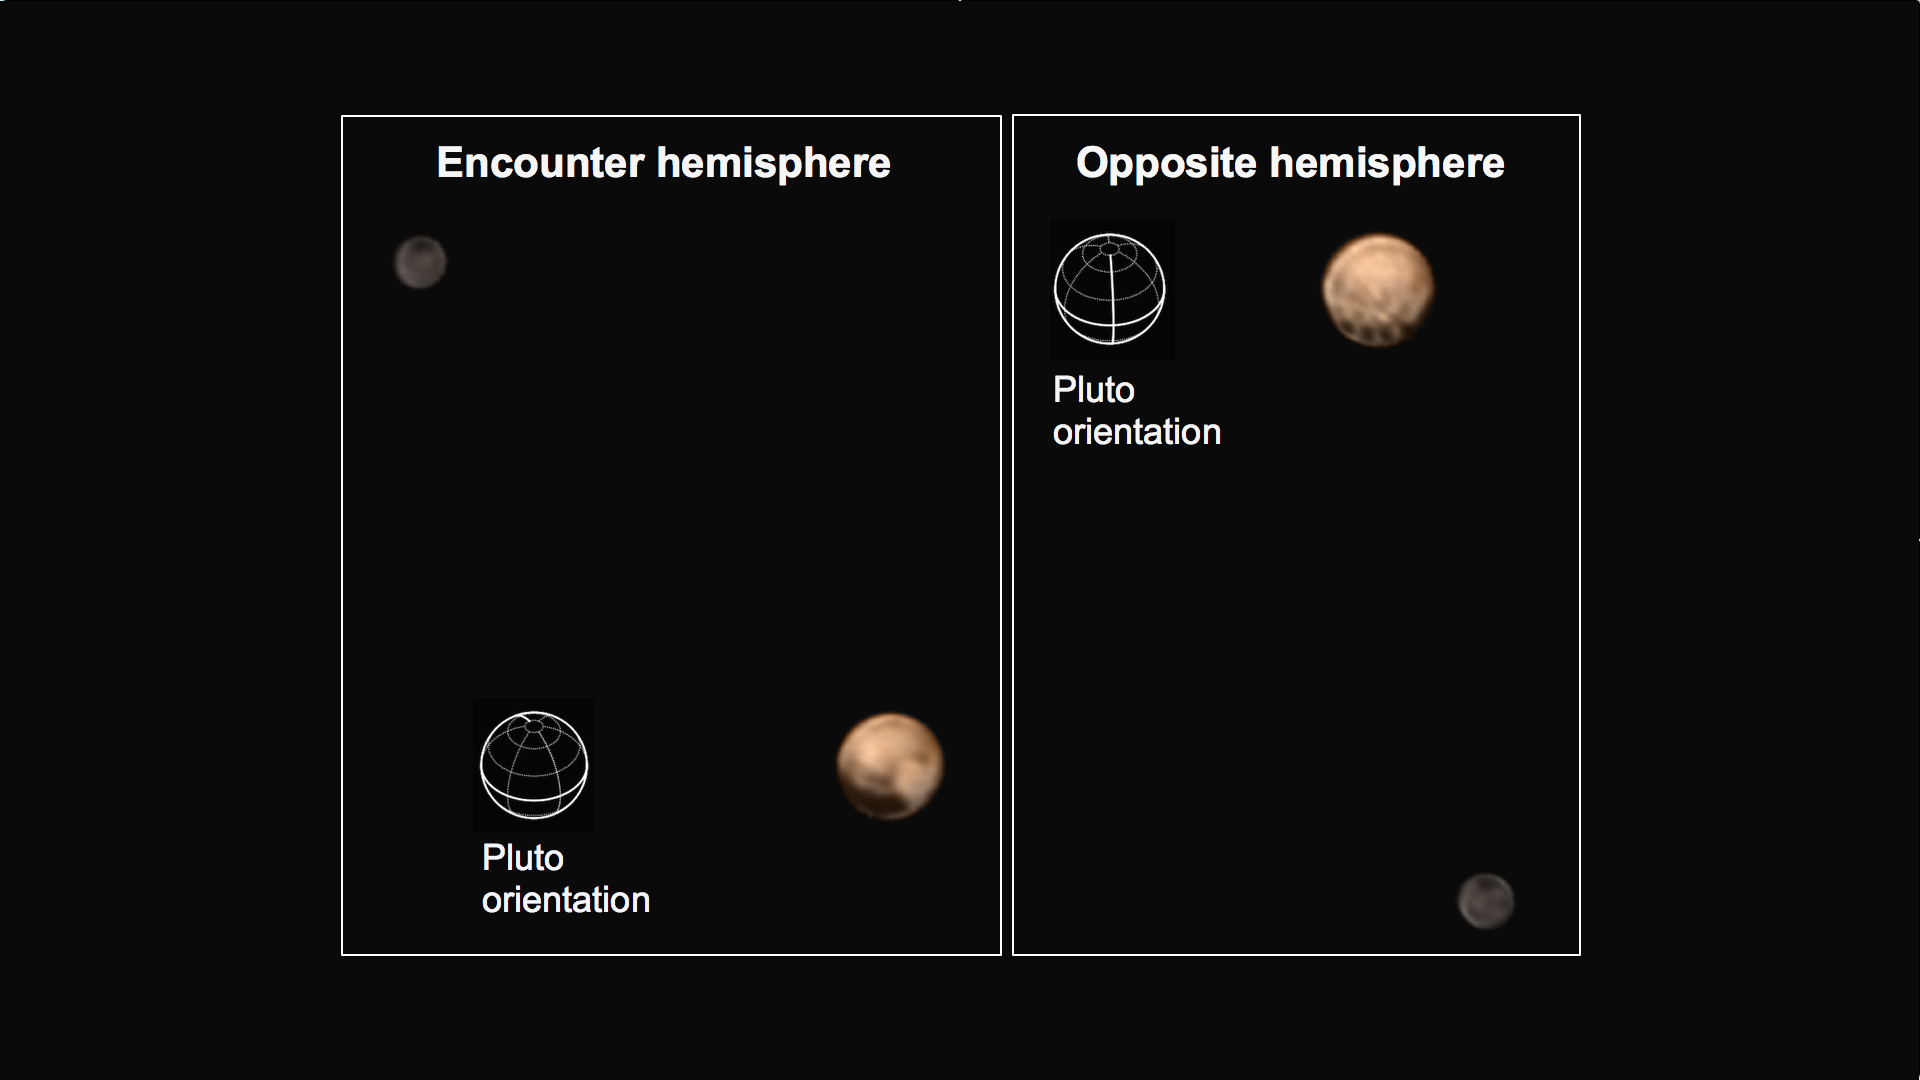 7-1-15_Pluto_Charon_color_hemispheres_annotated_JHUAPL_NASA_SWRI.jpg